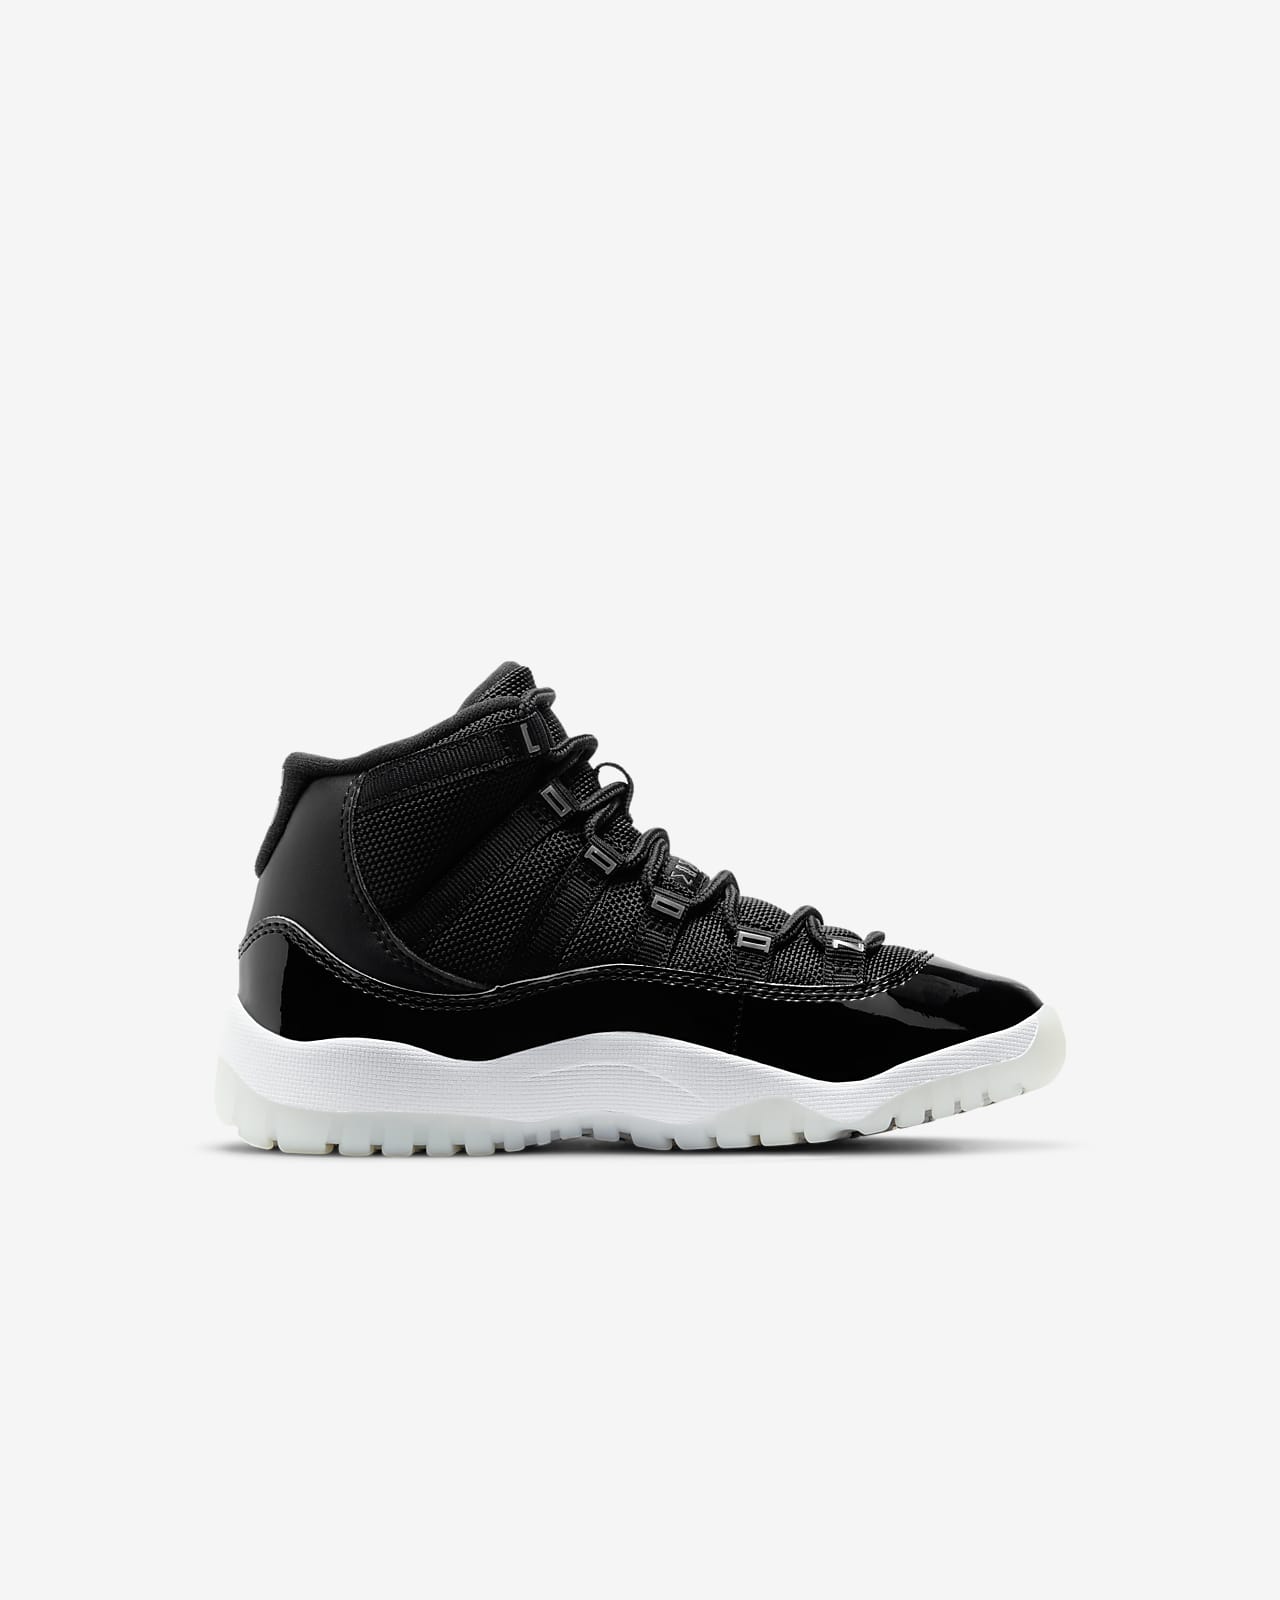 Air Jordan 11 Retro 3/4 Schuh für 